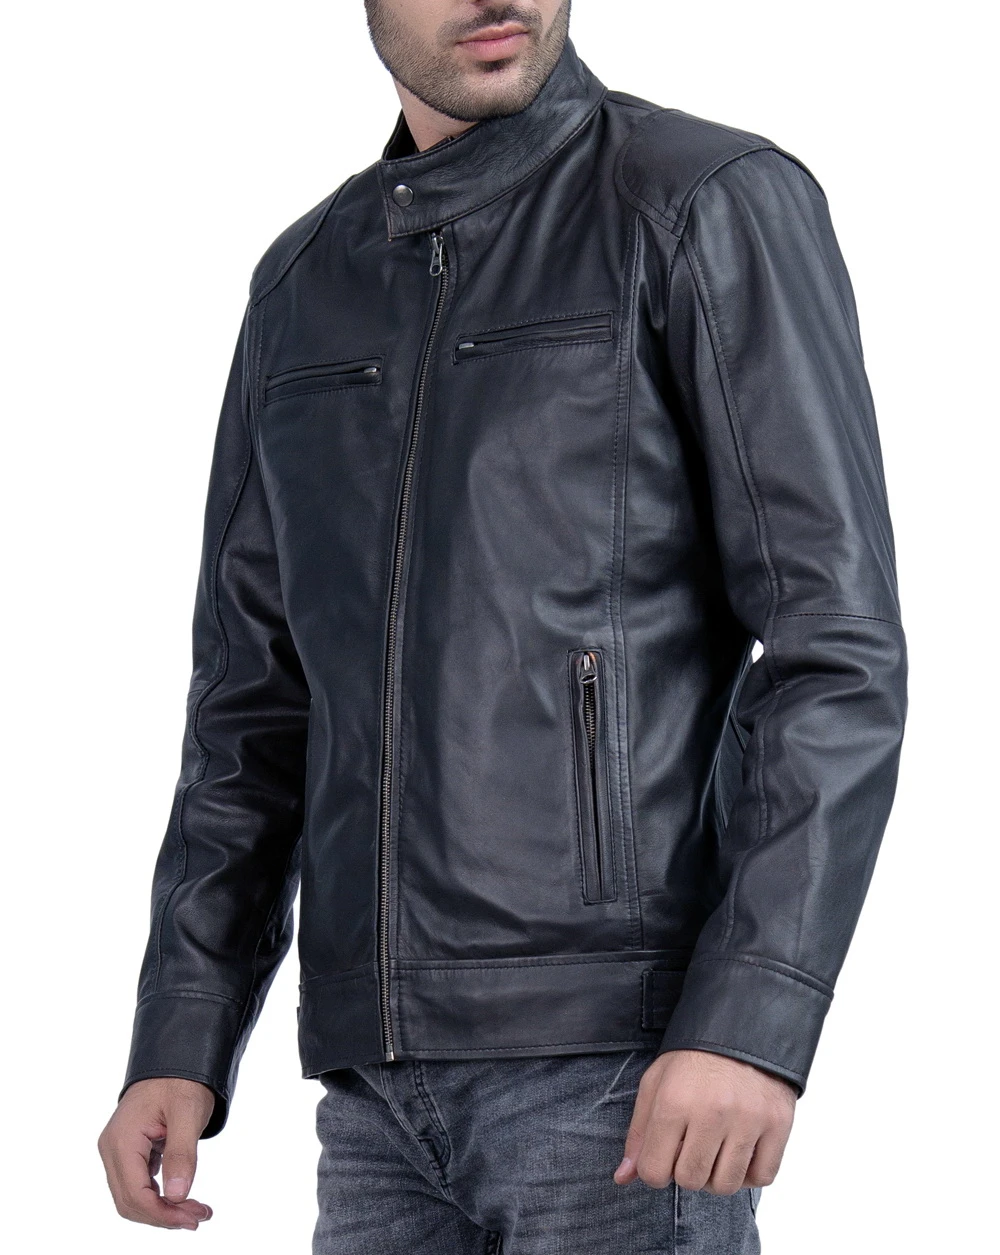 Buy Classic Biker Leather Jacket